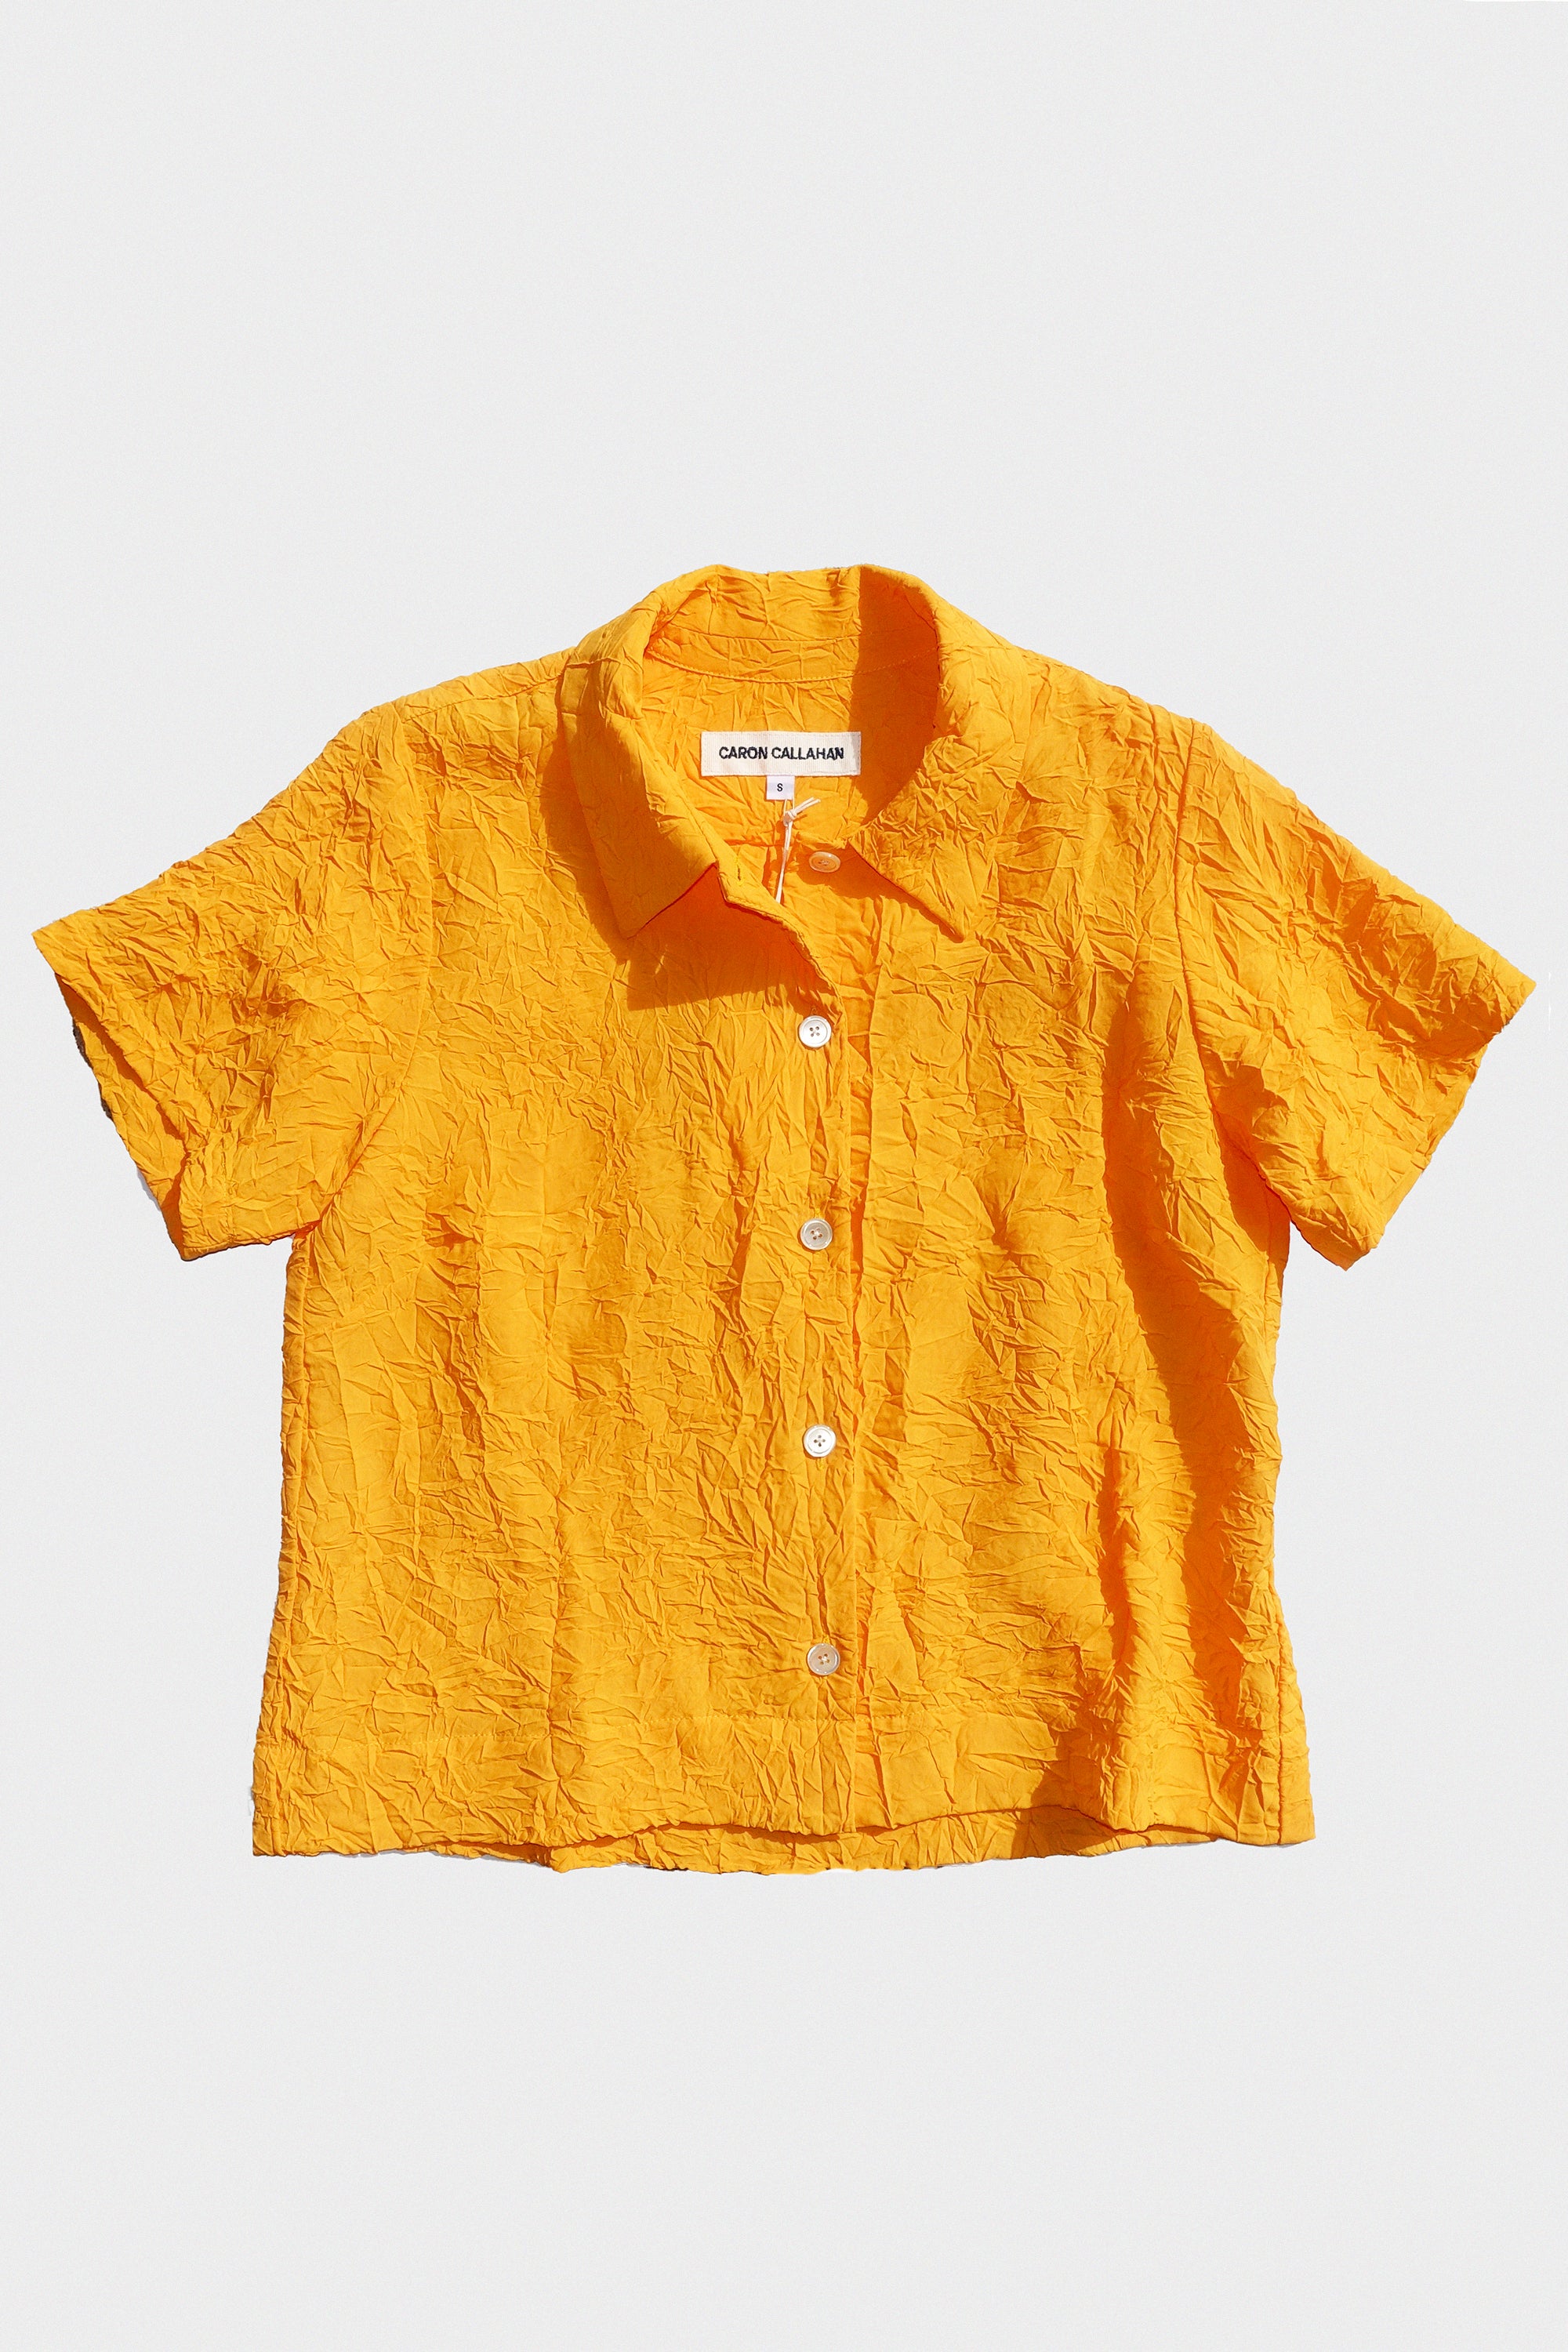 Johanson Shirt in Tangerine Crinkle Viscose